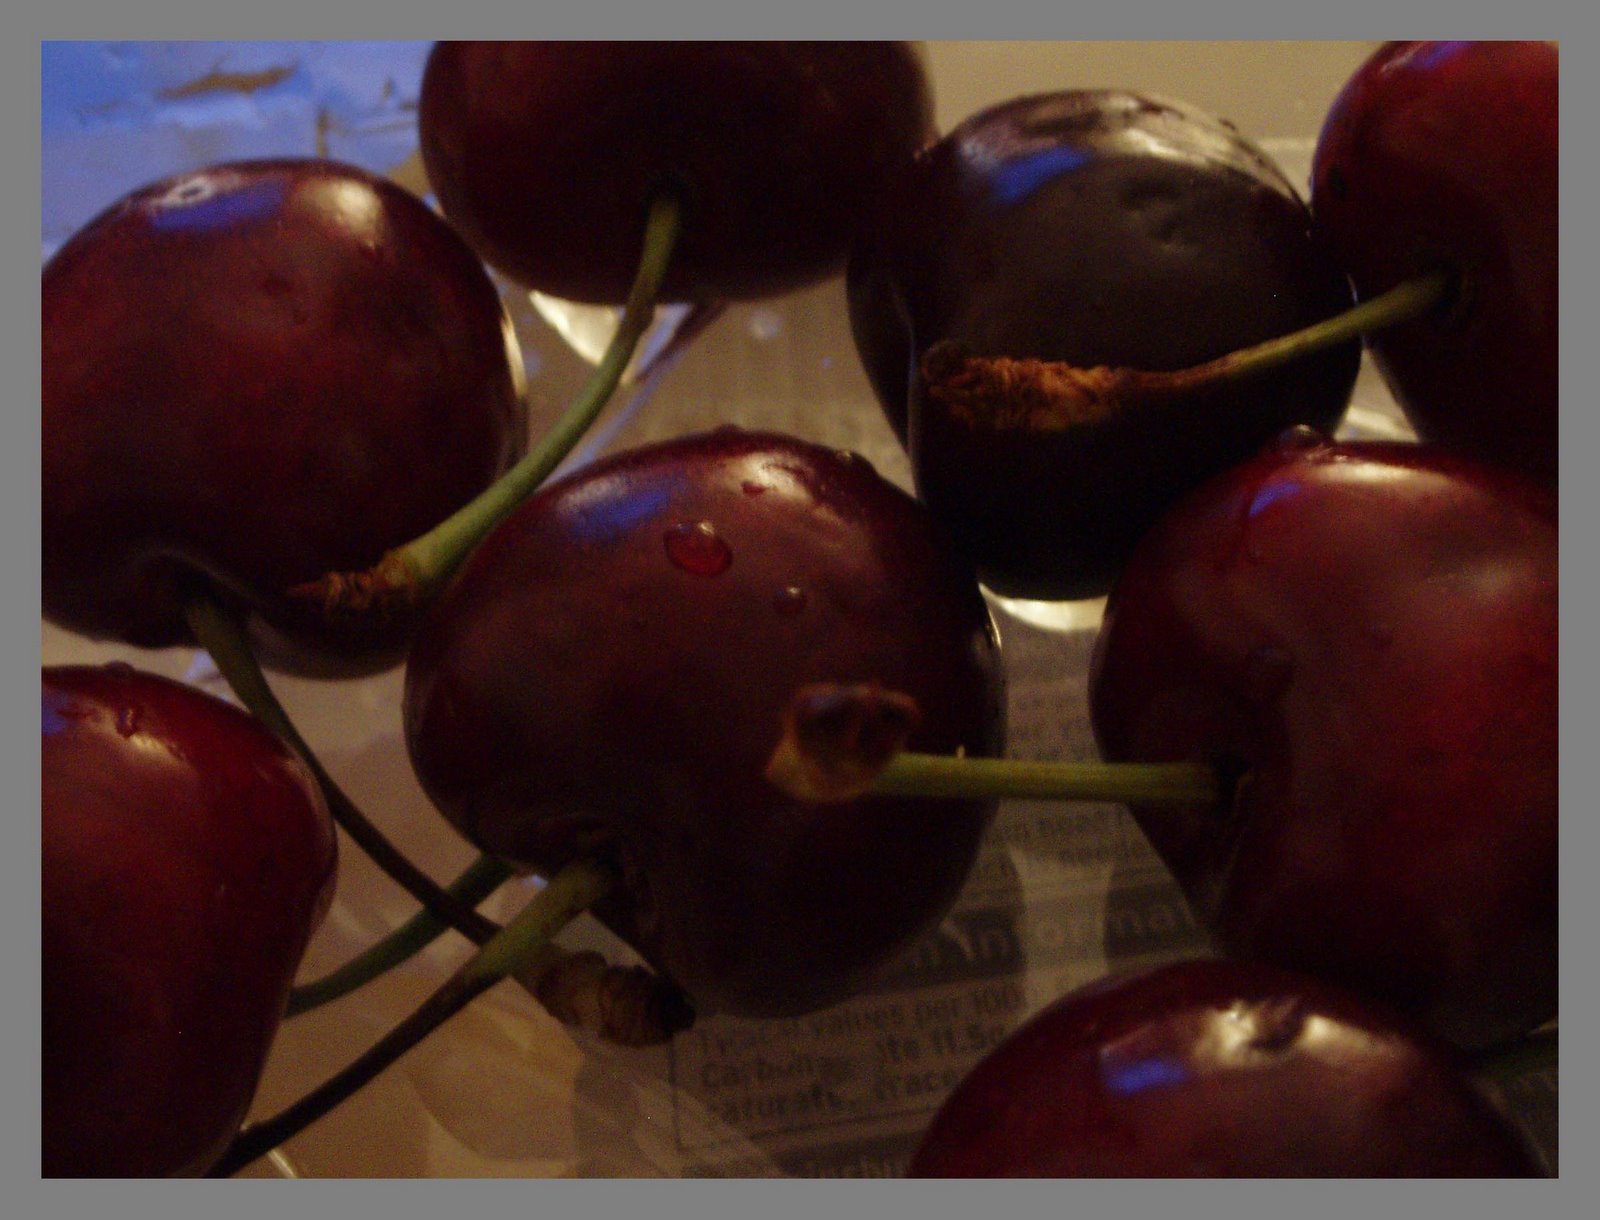 [cherries.jpg]